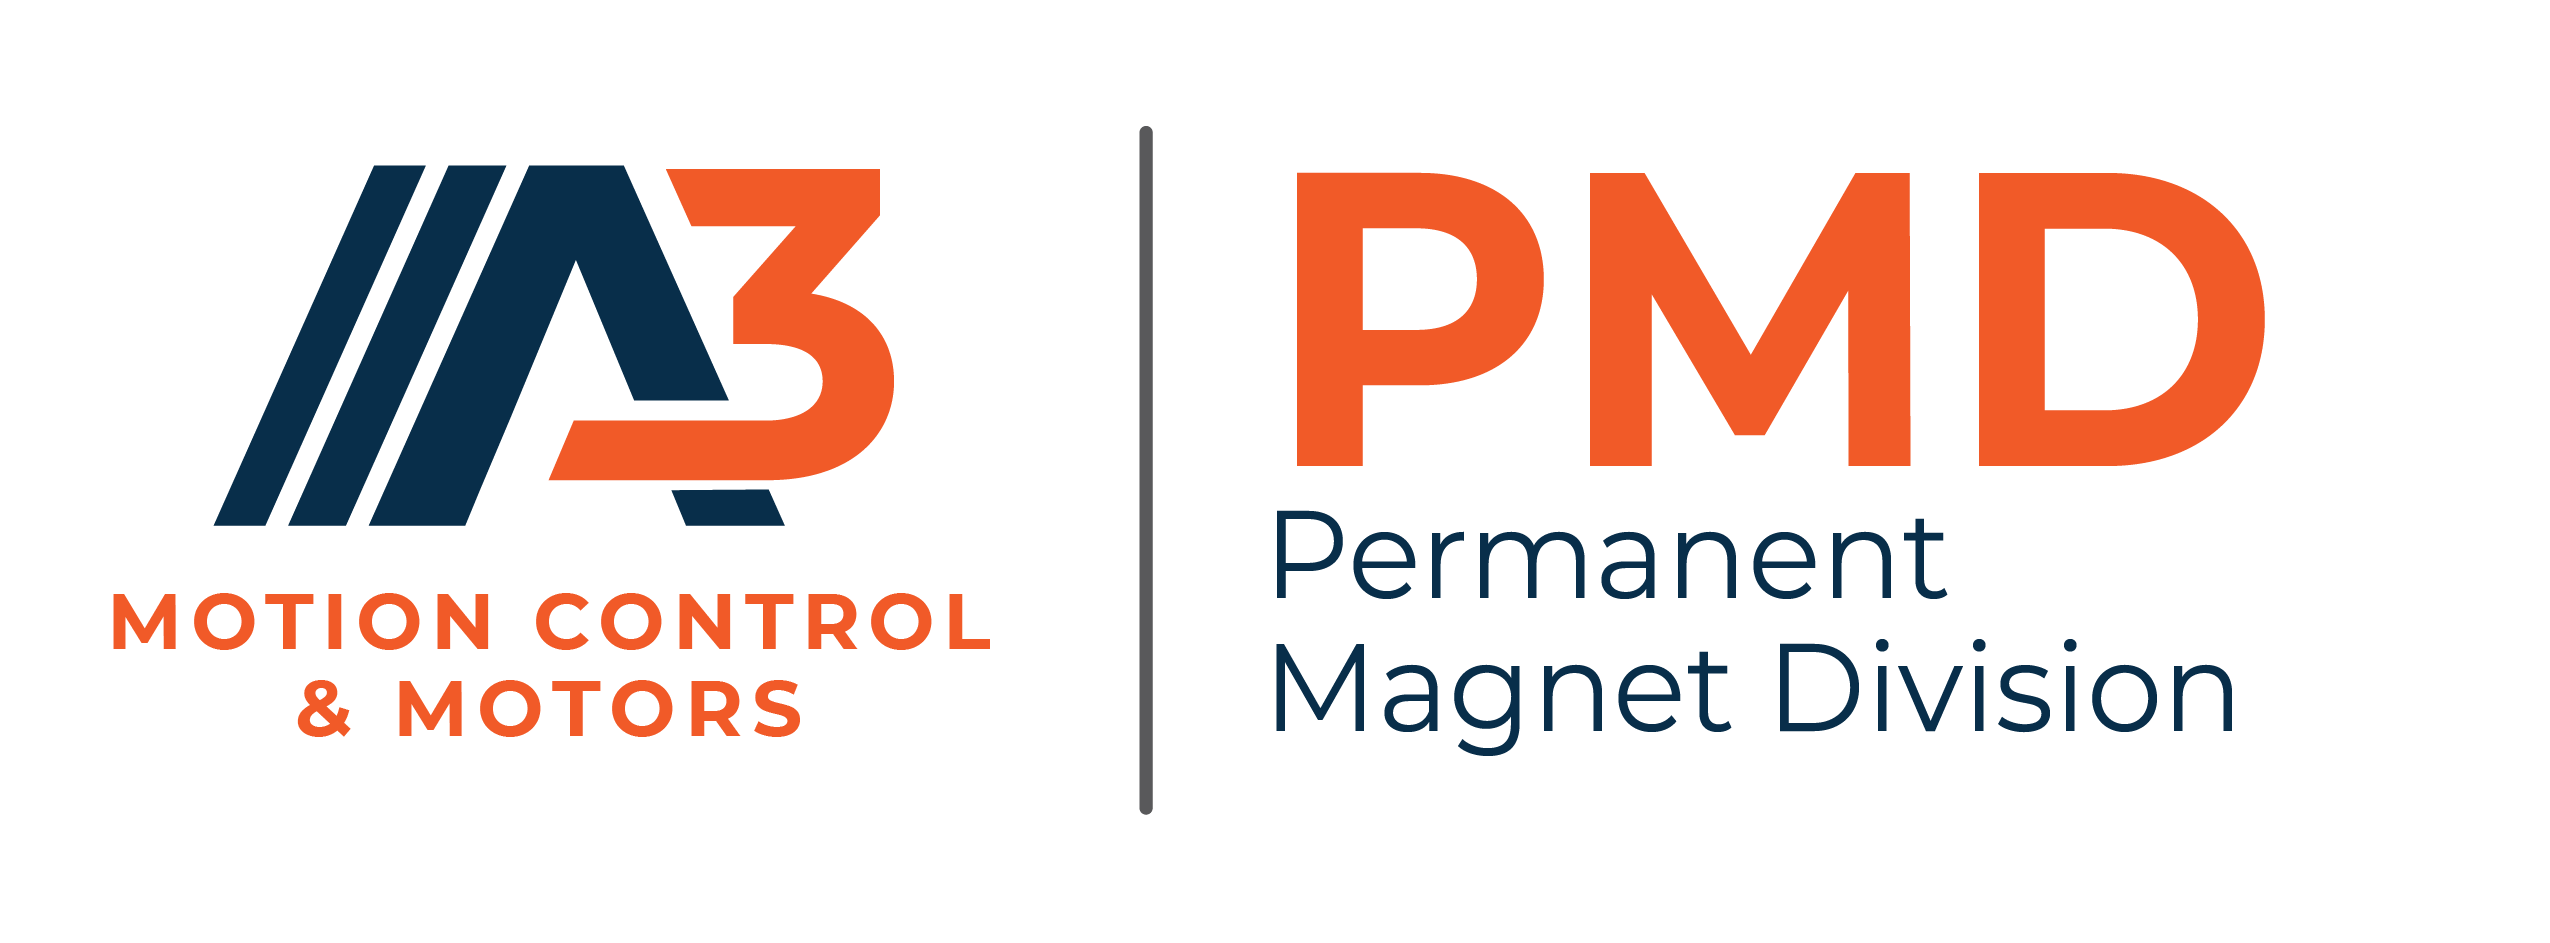 Permanent Magnet Division logo